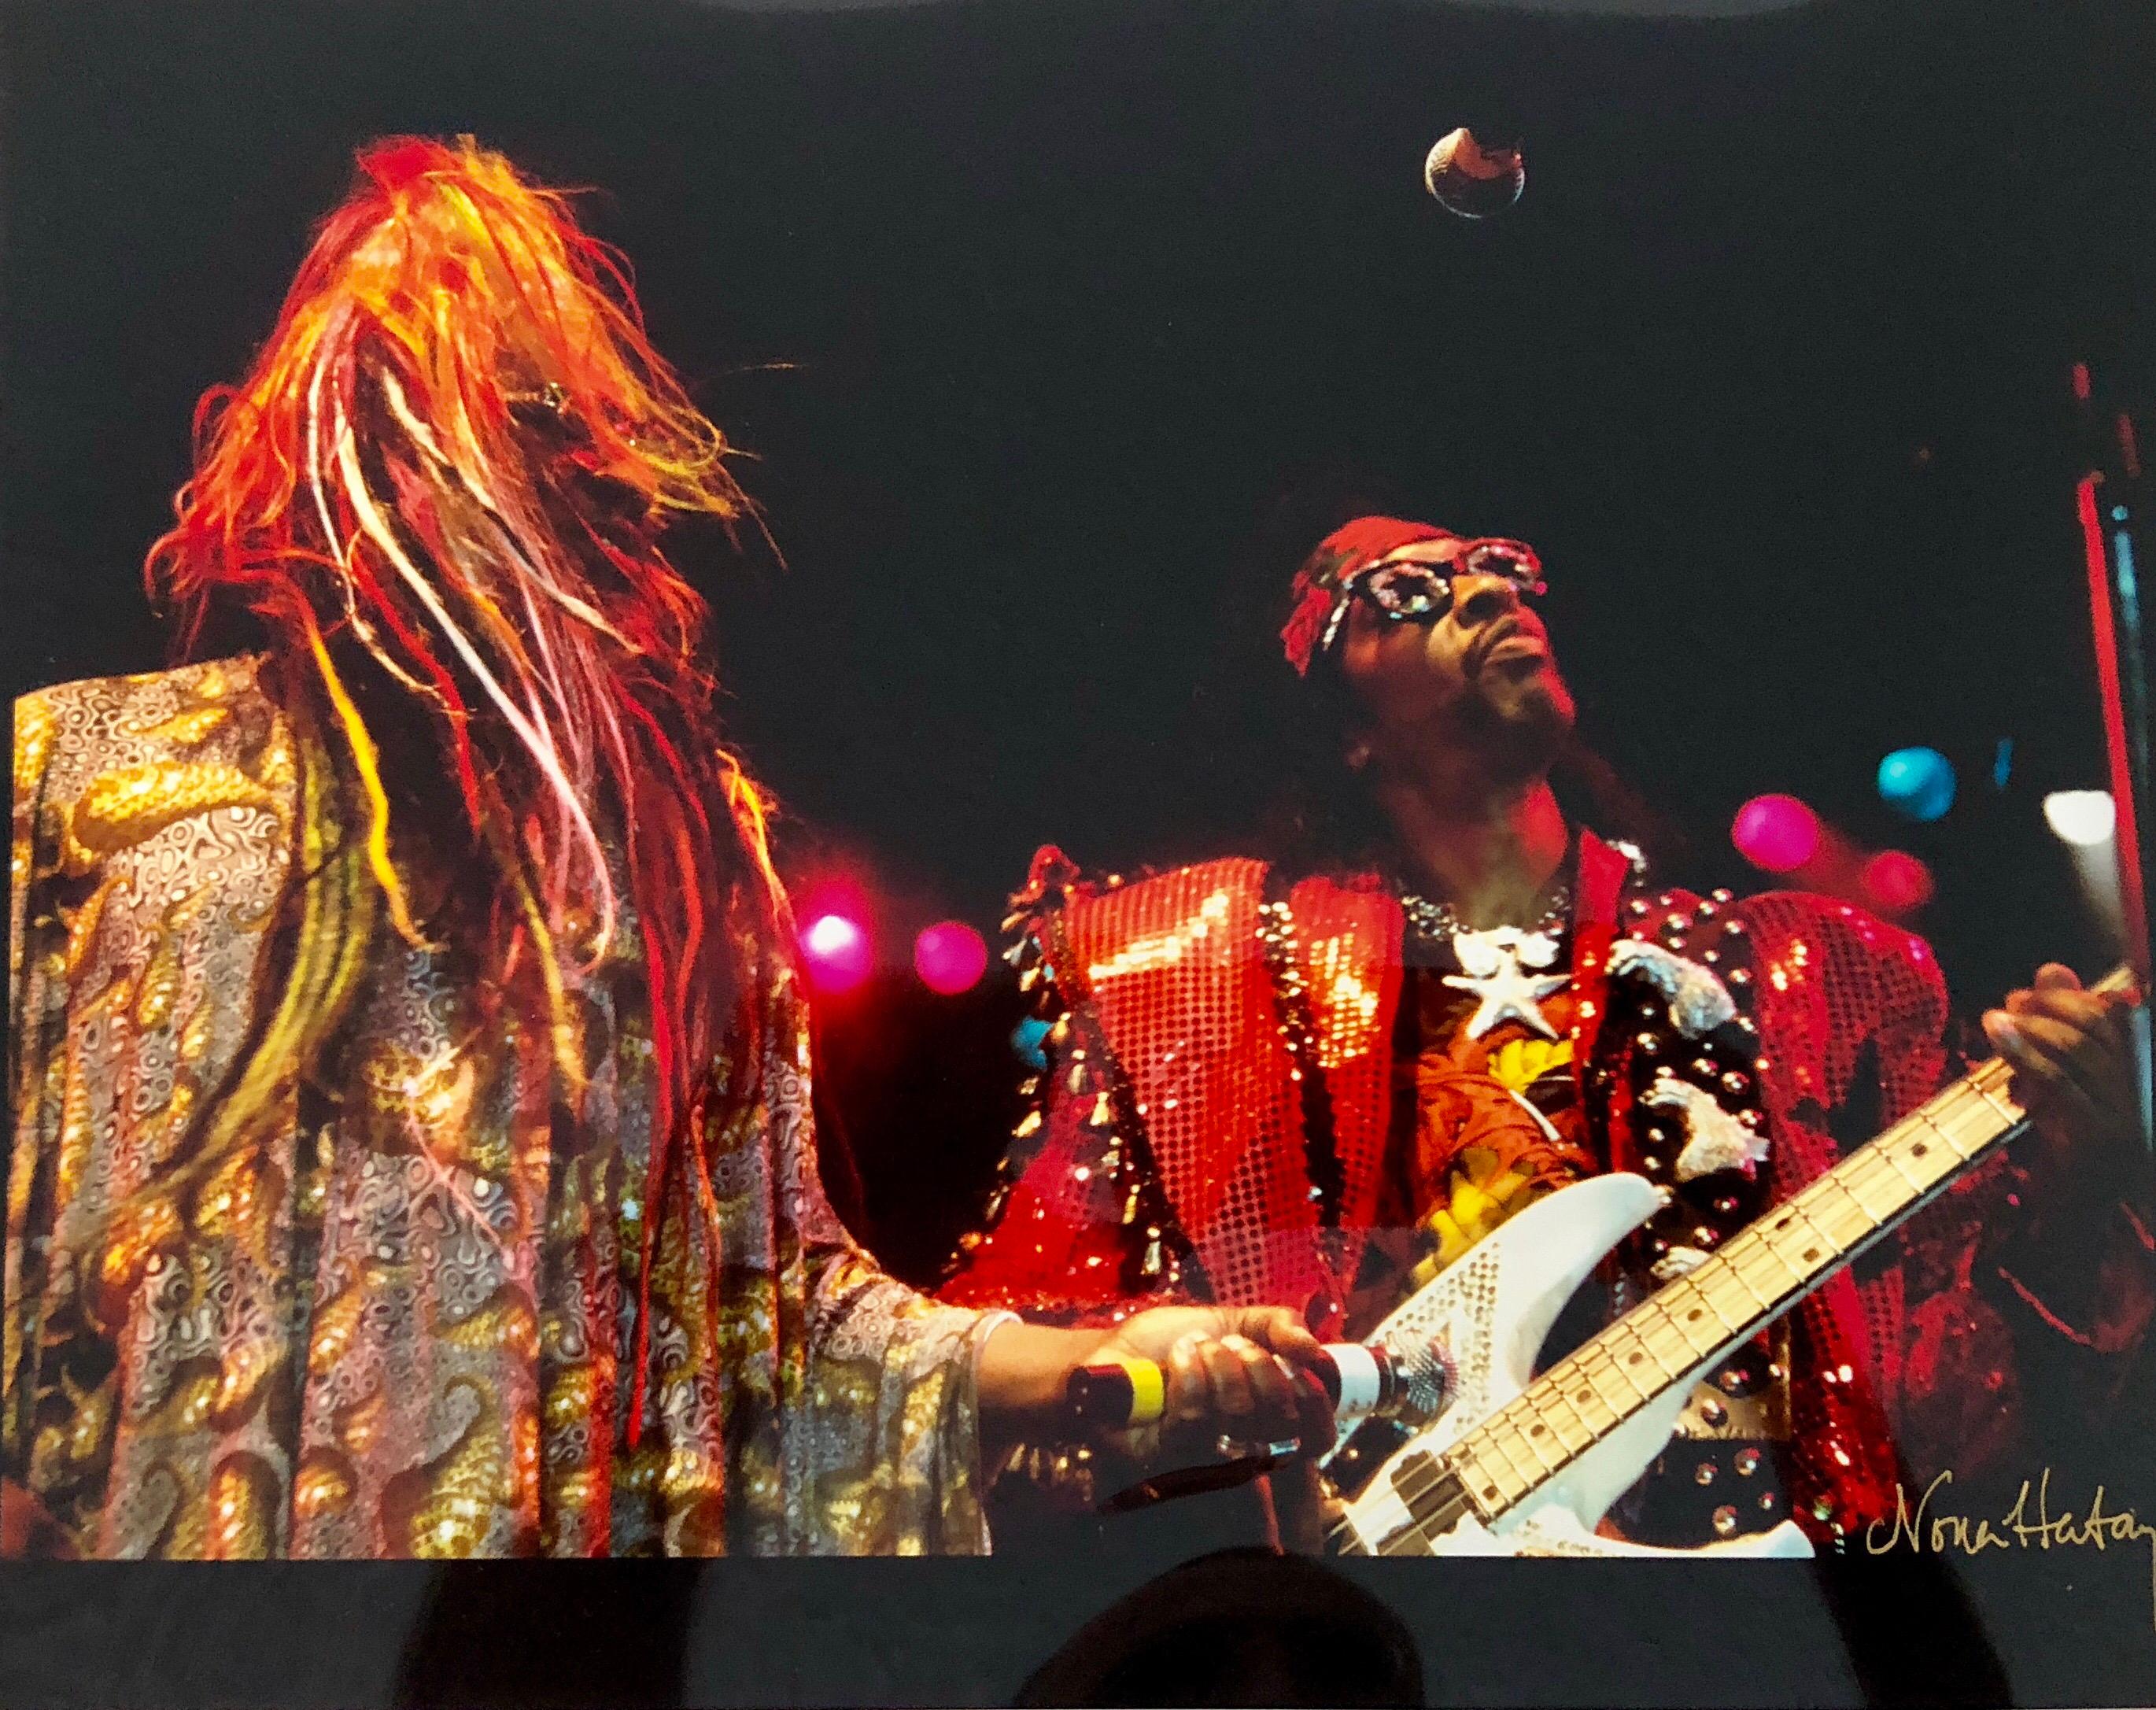 Farbiges Rock & Roll-Foto, handsigniert, Woodstock Music Festival, African American  – Photograph von Nona Hatay